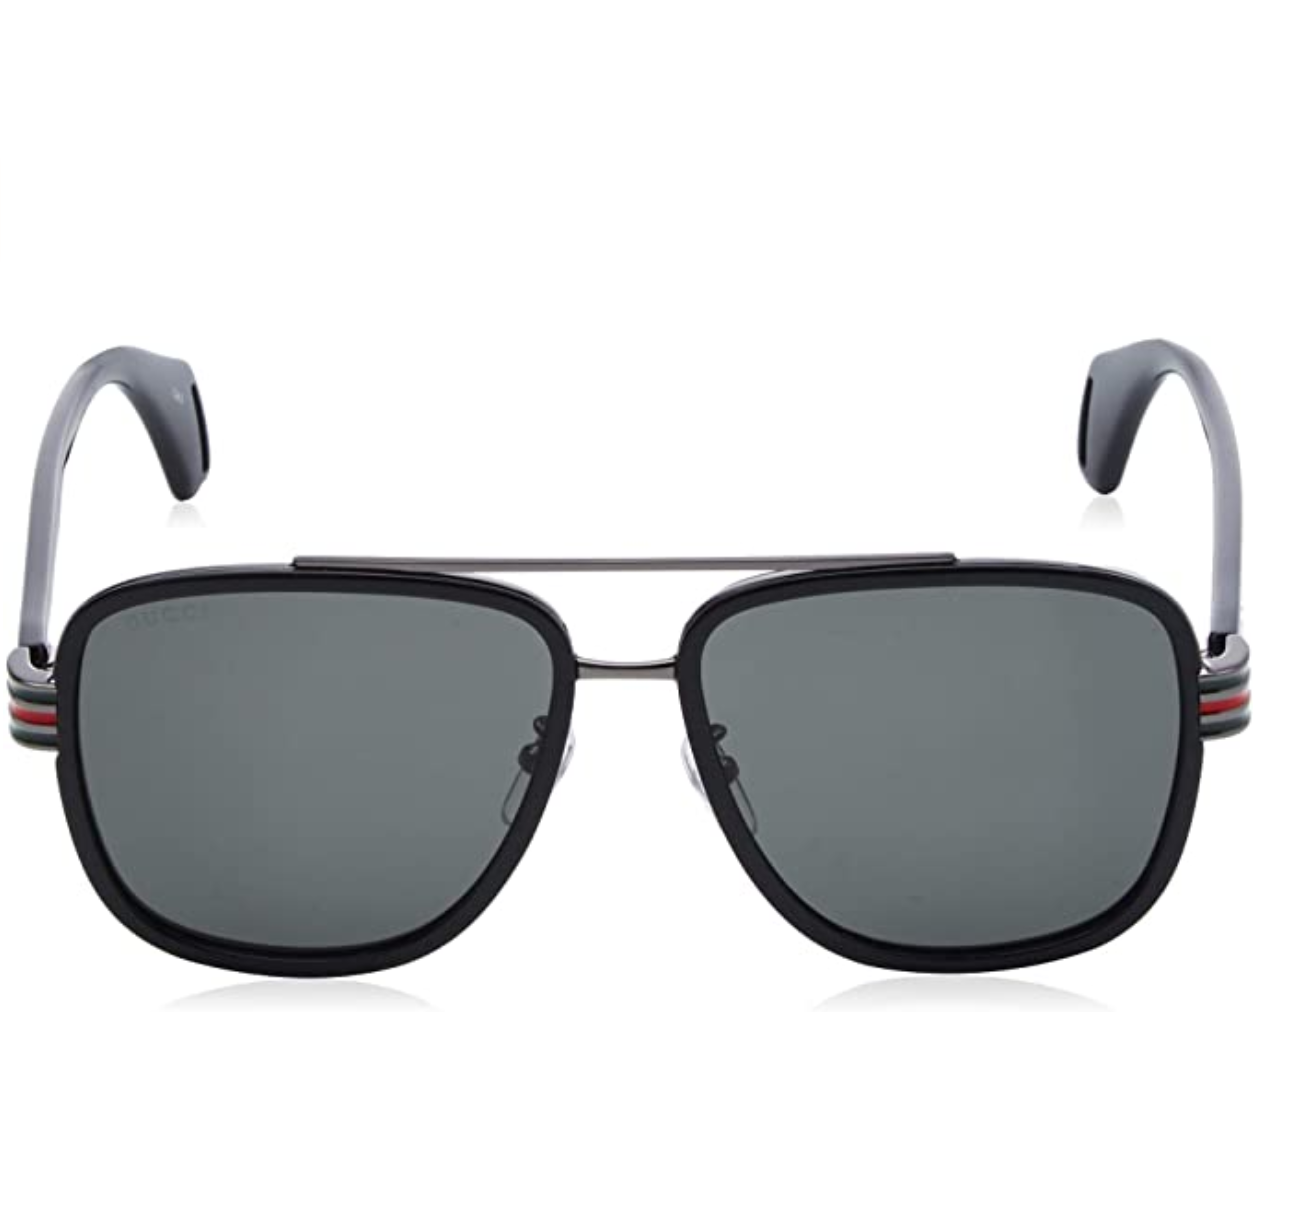 Gucci GG 0448 S 001 Black Shiny Black Grey 58 mm Men's Sunglasses